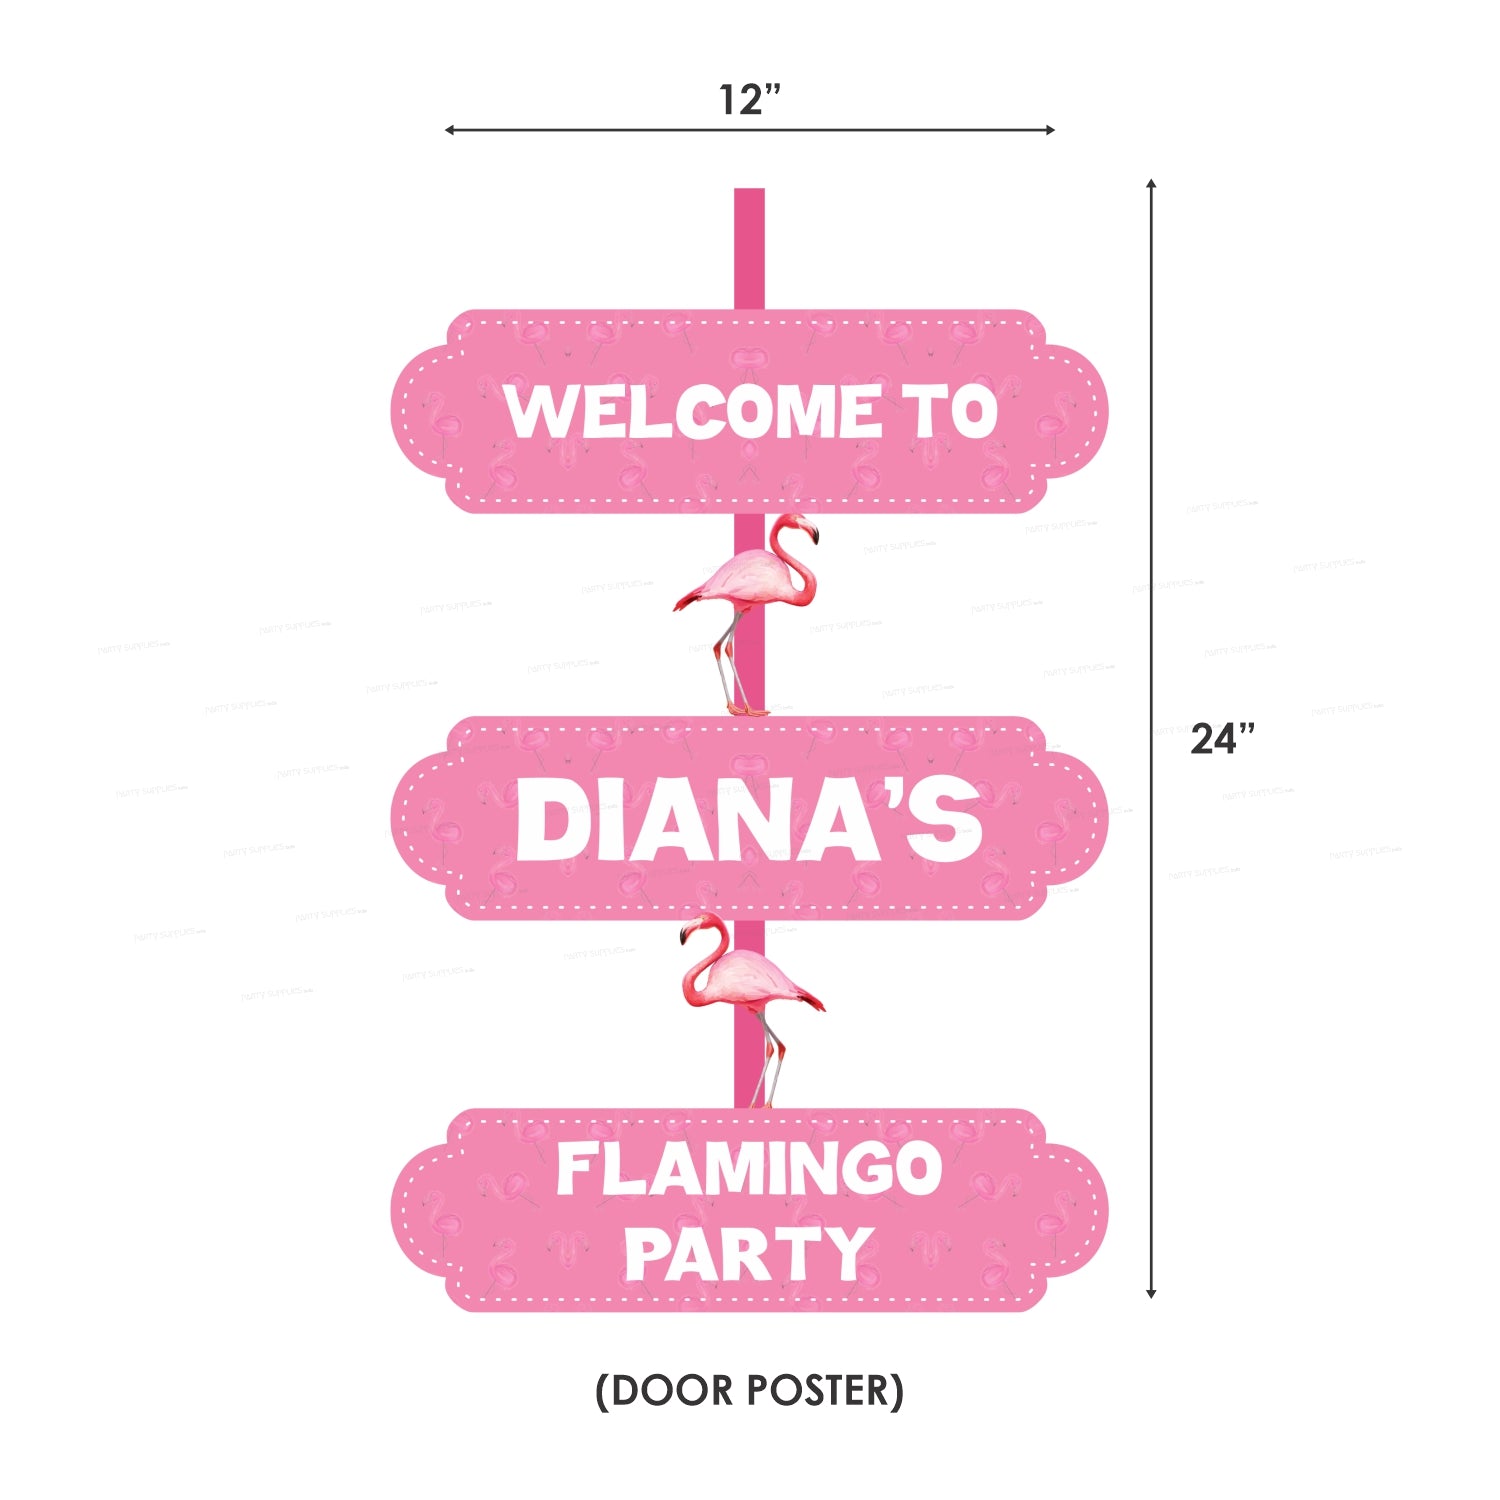 PSI Flamingo Theme Classic Kit